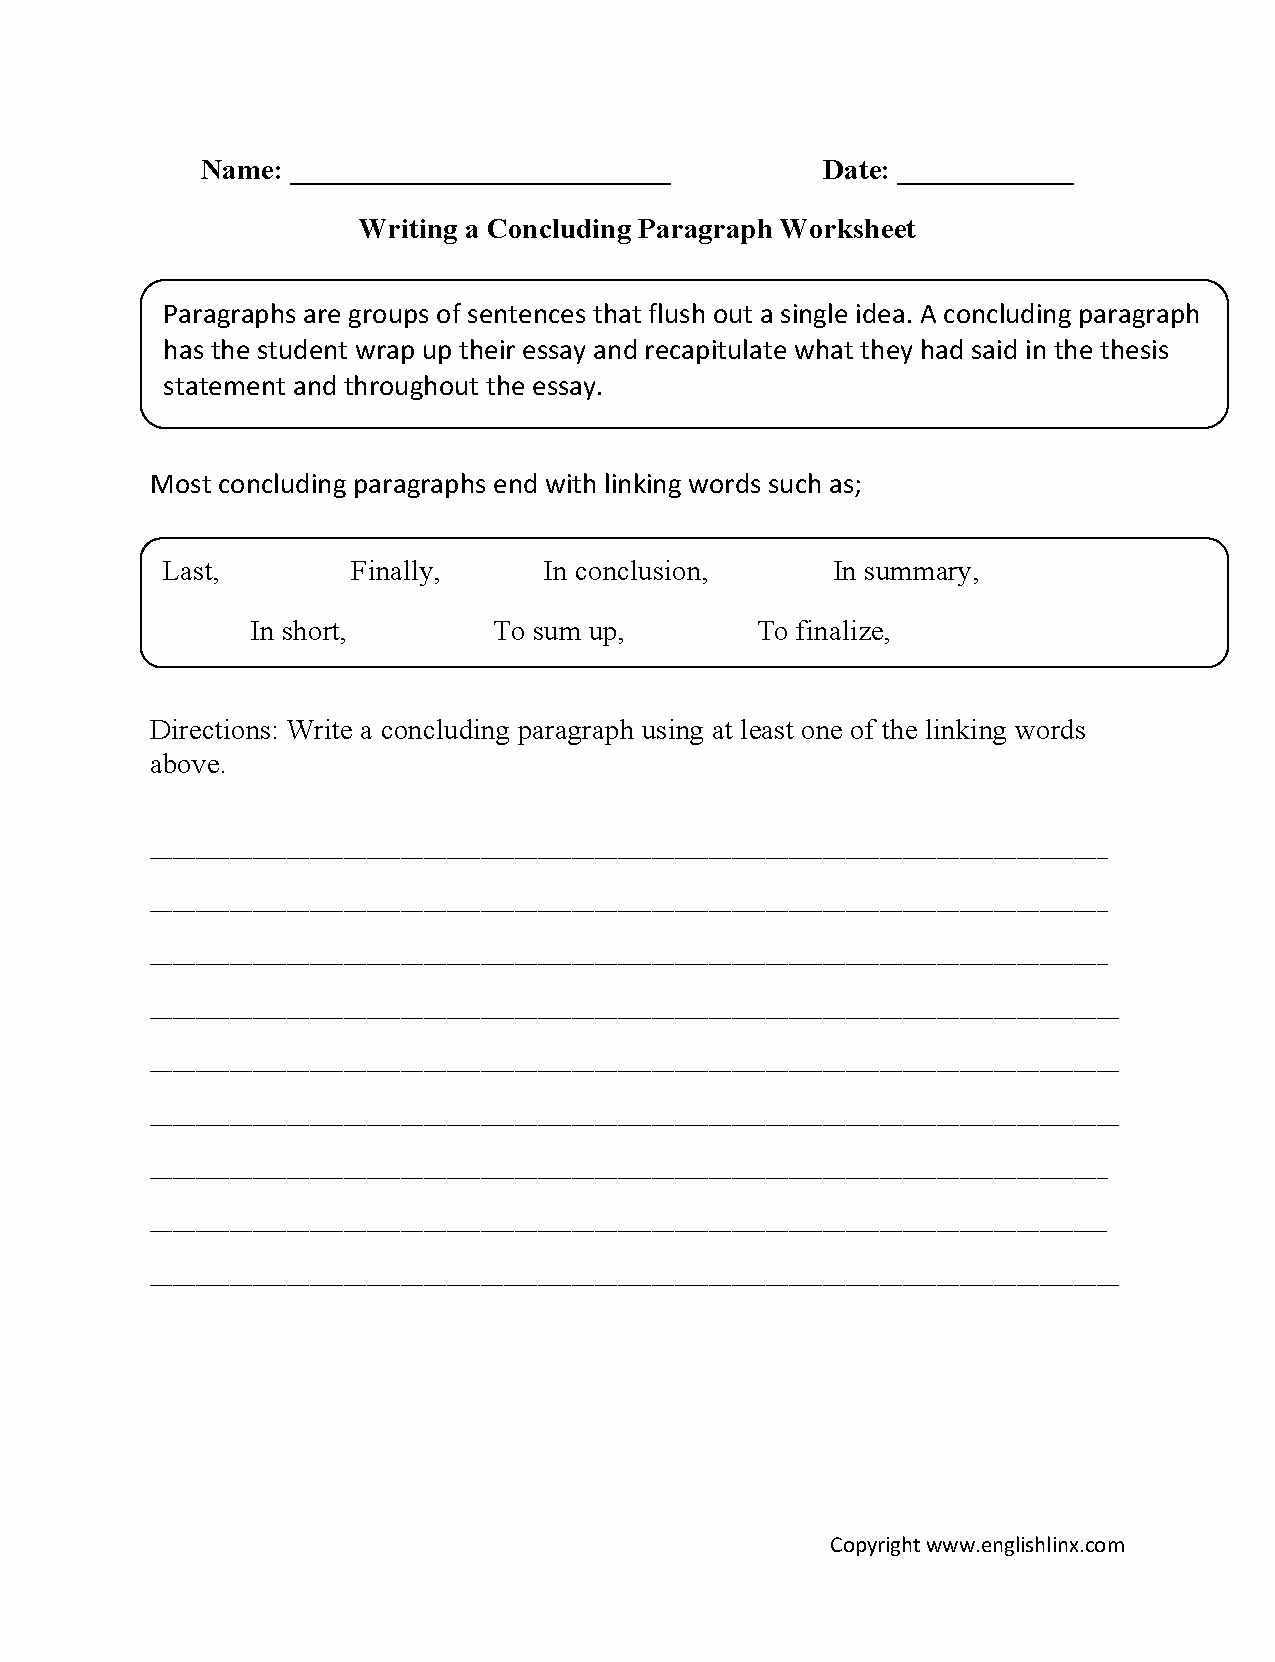 Free Paragraph Writing Worksheets New Writing Worksheets